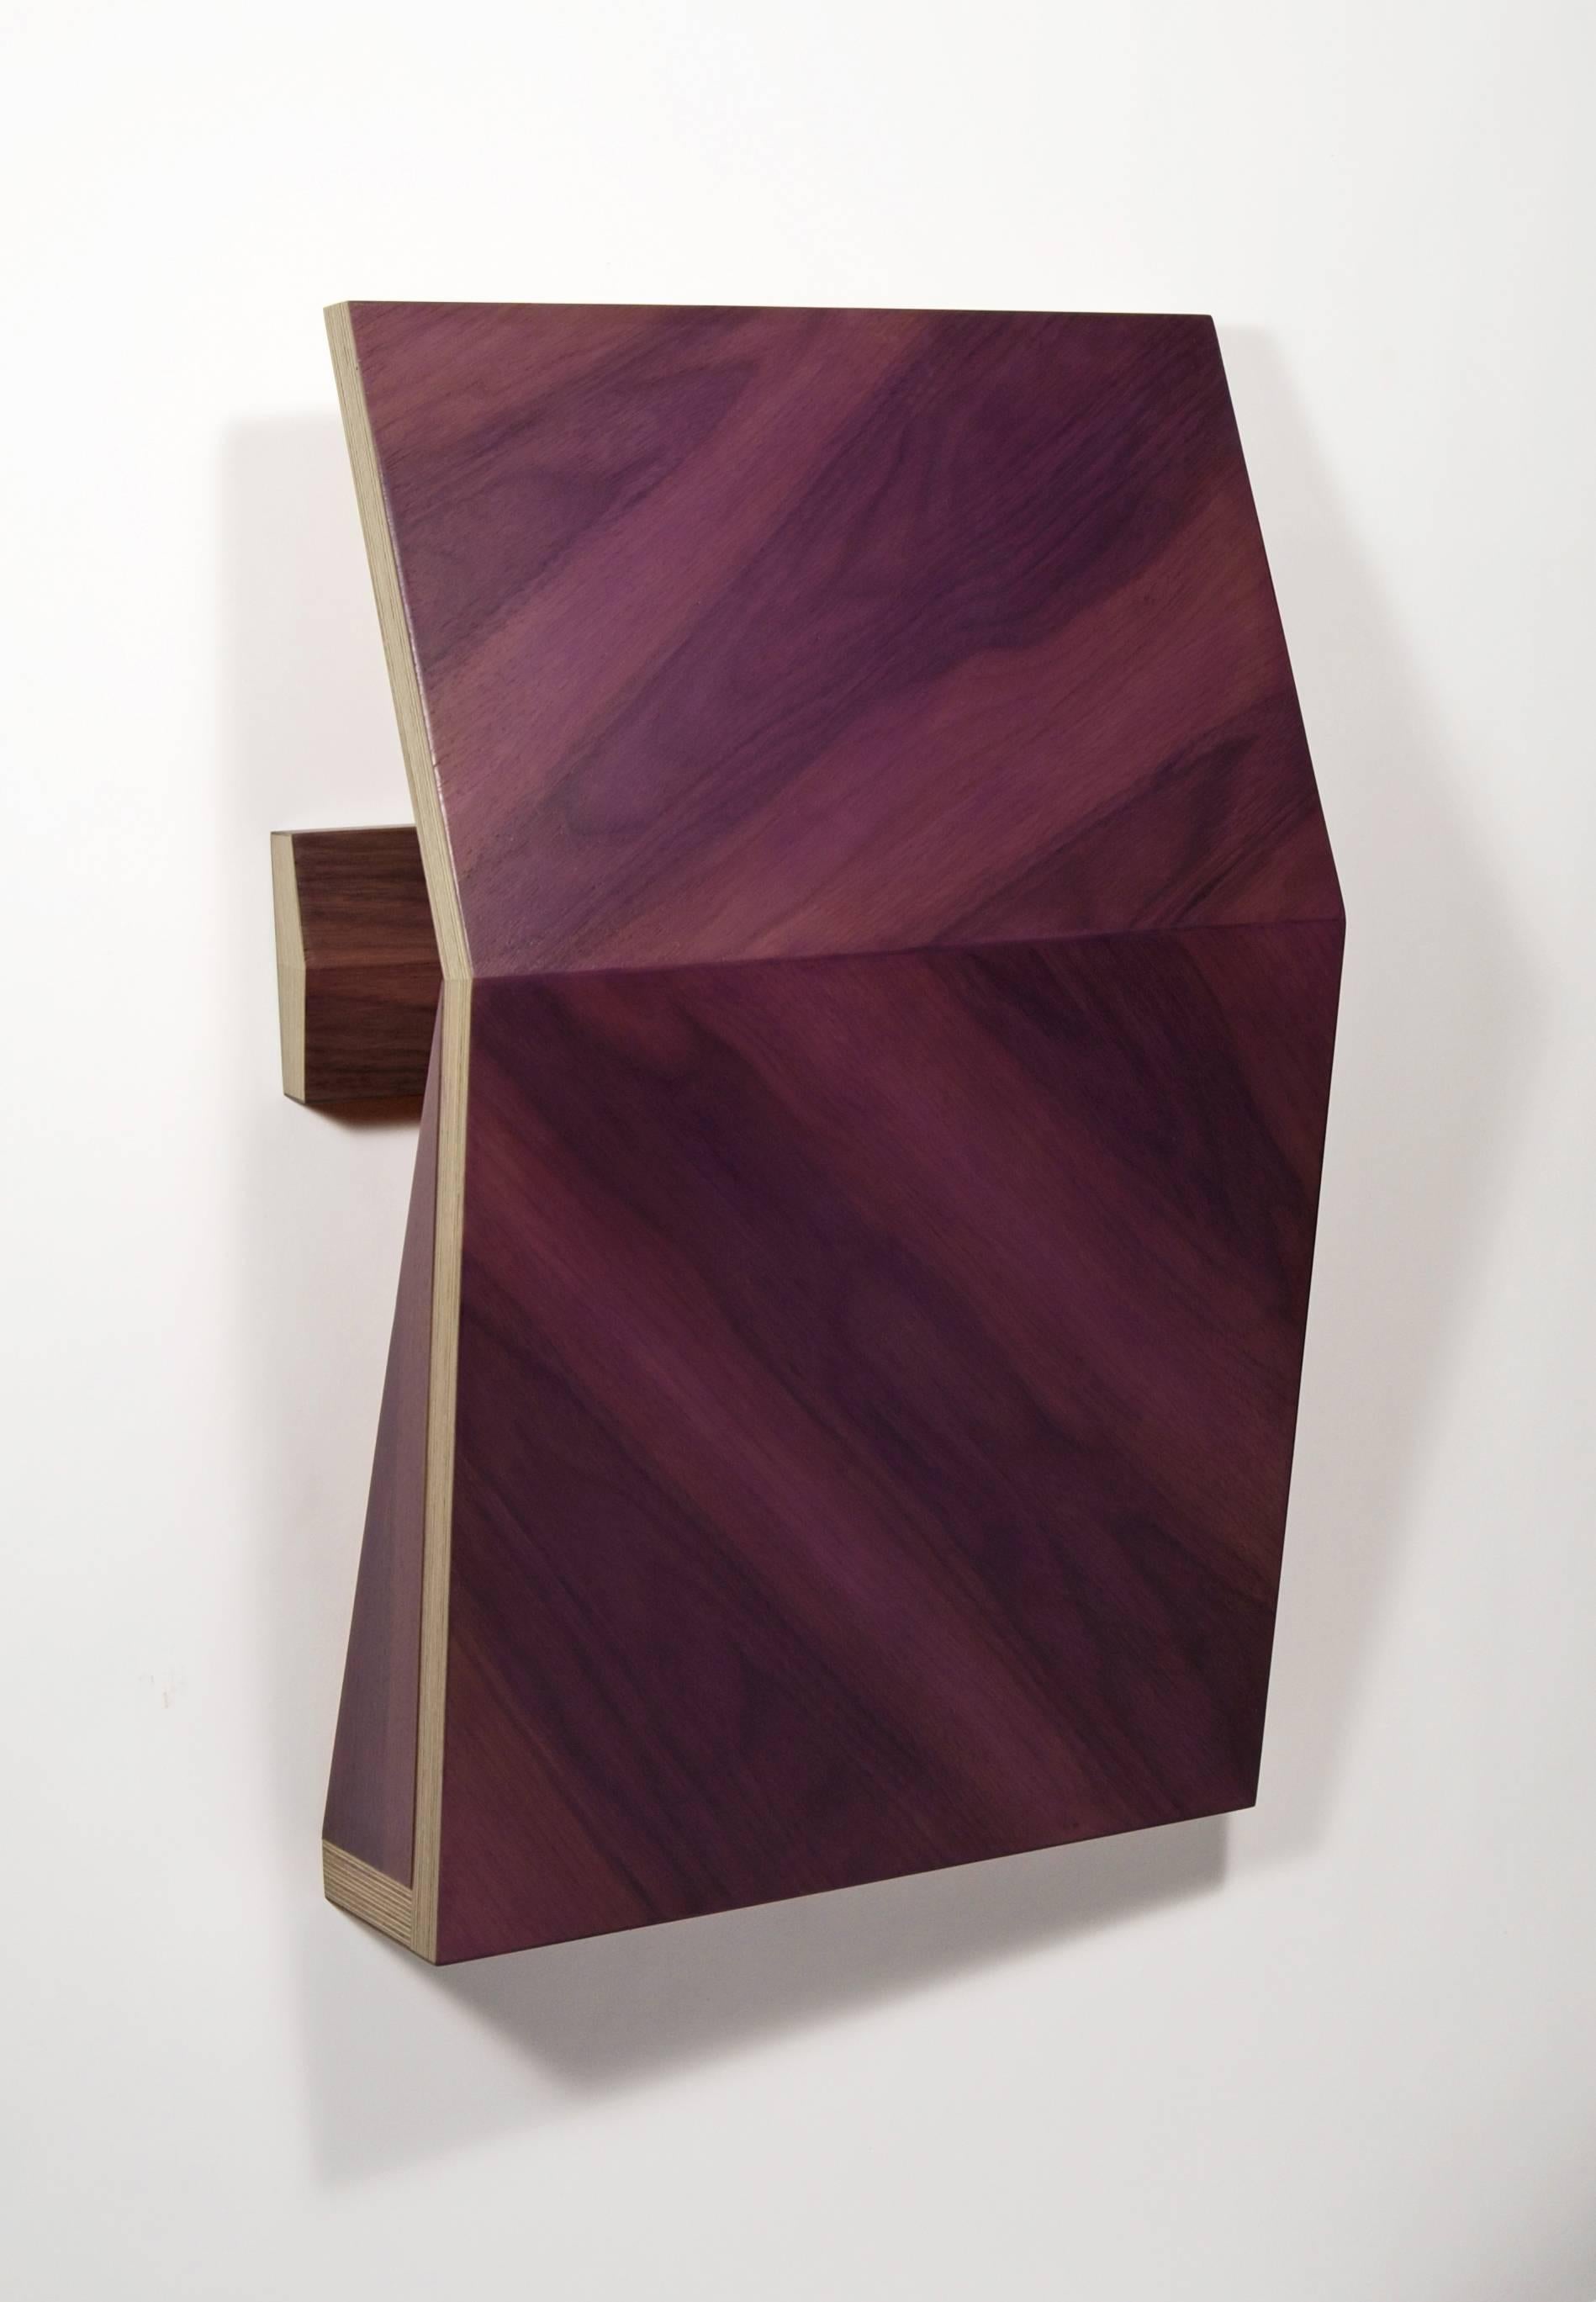 Richard Bottwin, Walnutto, 2015, bois, peinture acrylique 